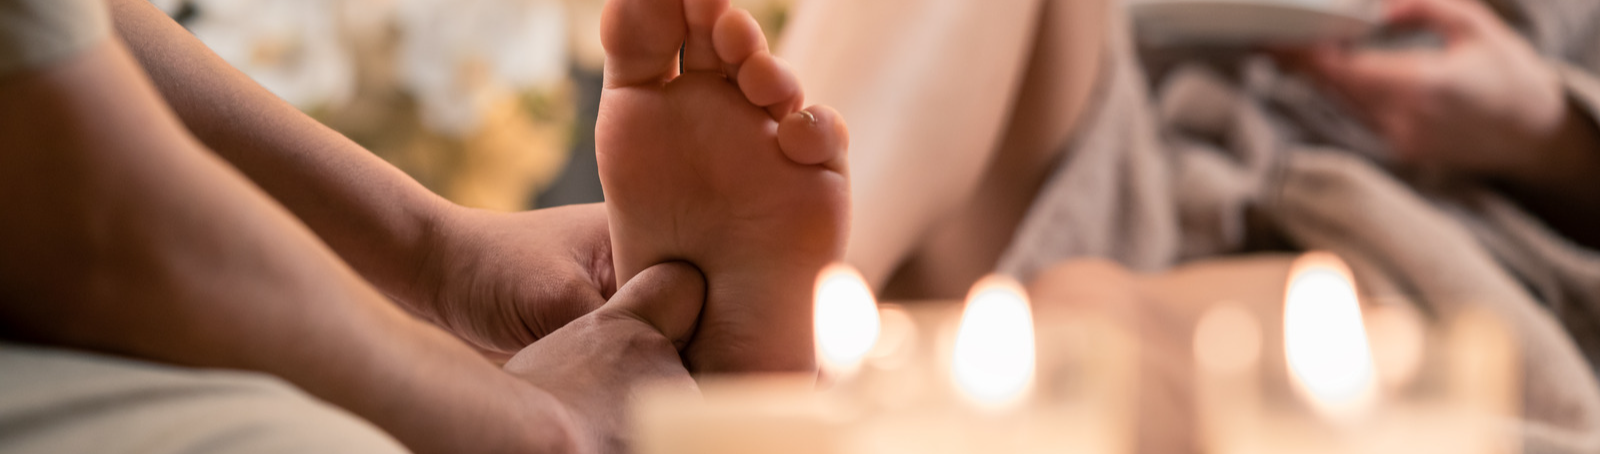 Thai Massage and Reflexology: Stimulating the Body’s Natural Healing Process